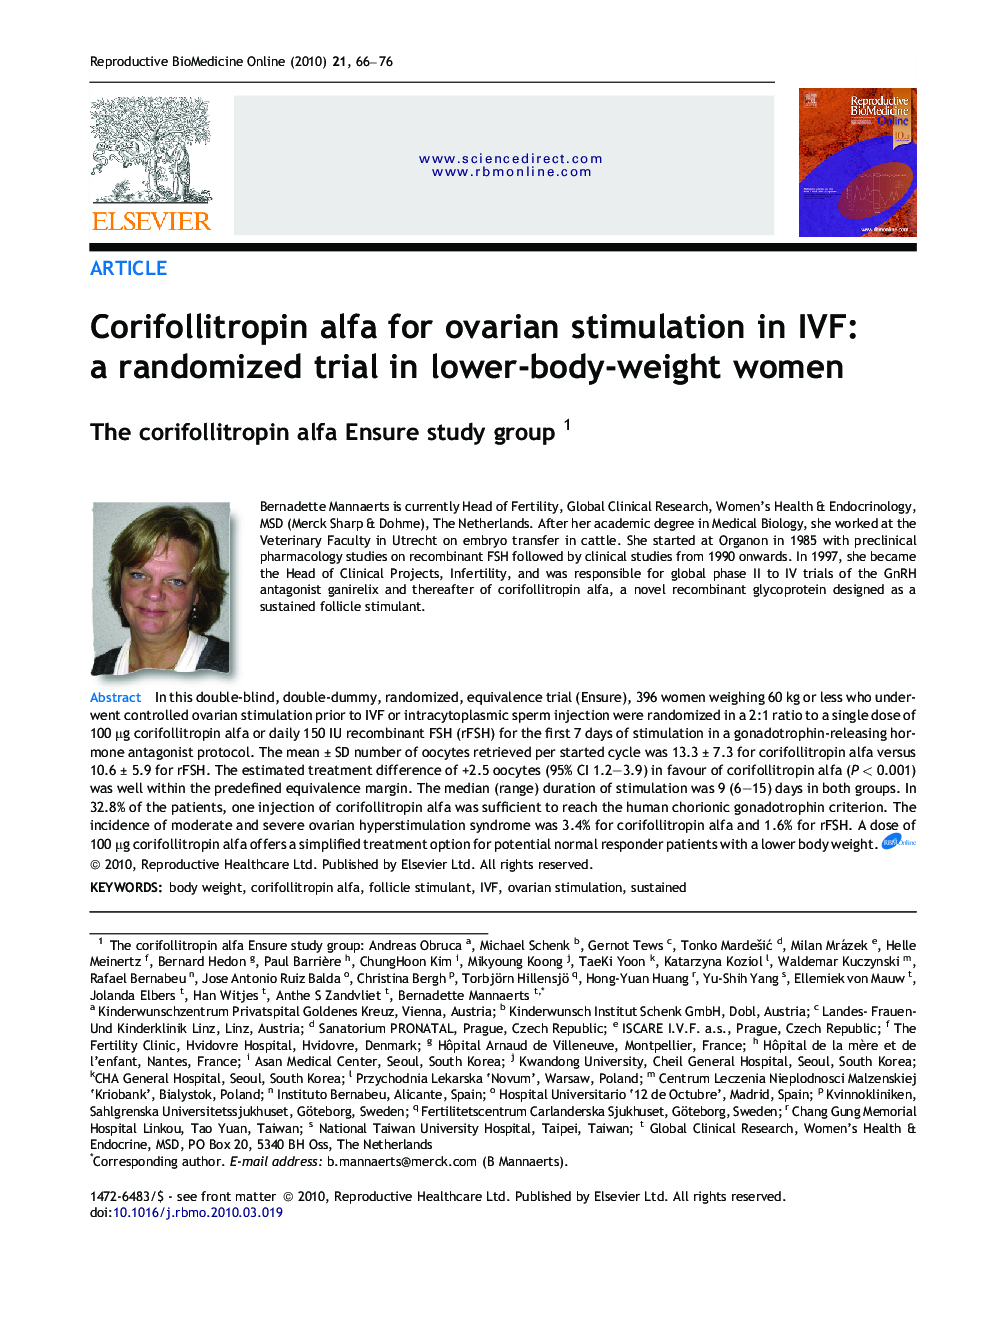 Corifollitropin alfa for ovarian stimulation in IVF: a randomized trial in lower-body-weight women 